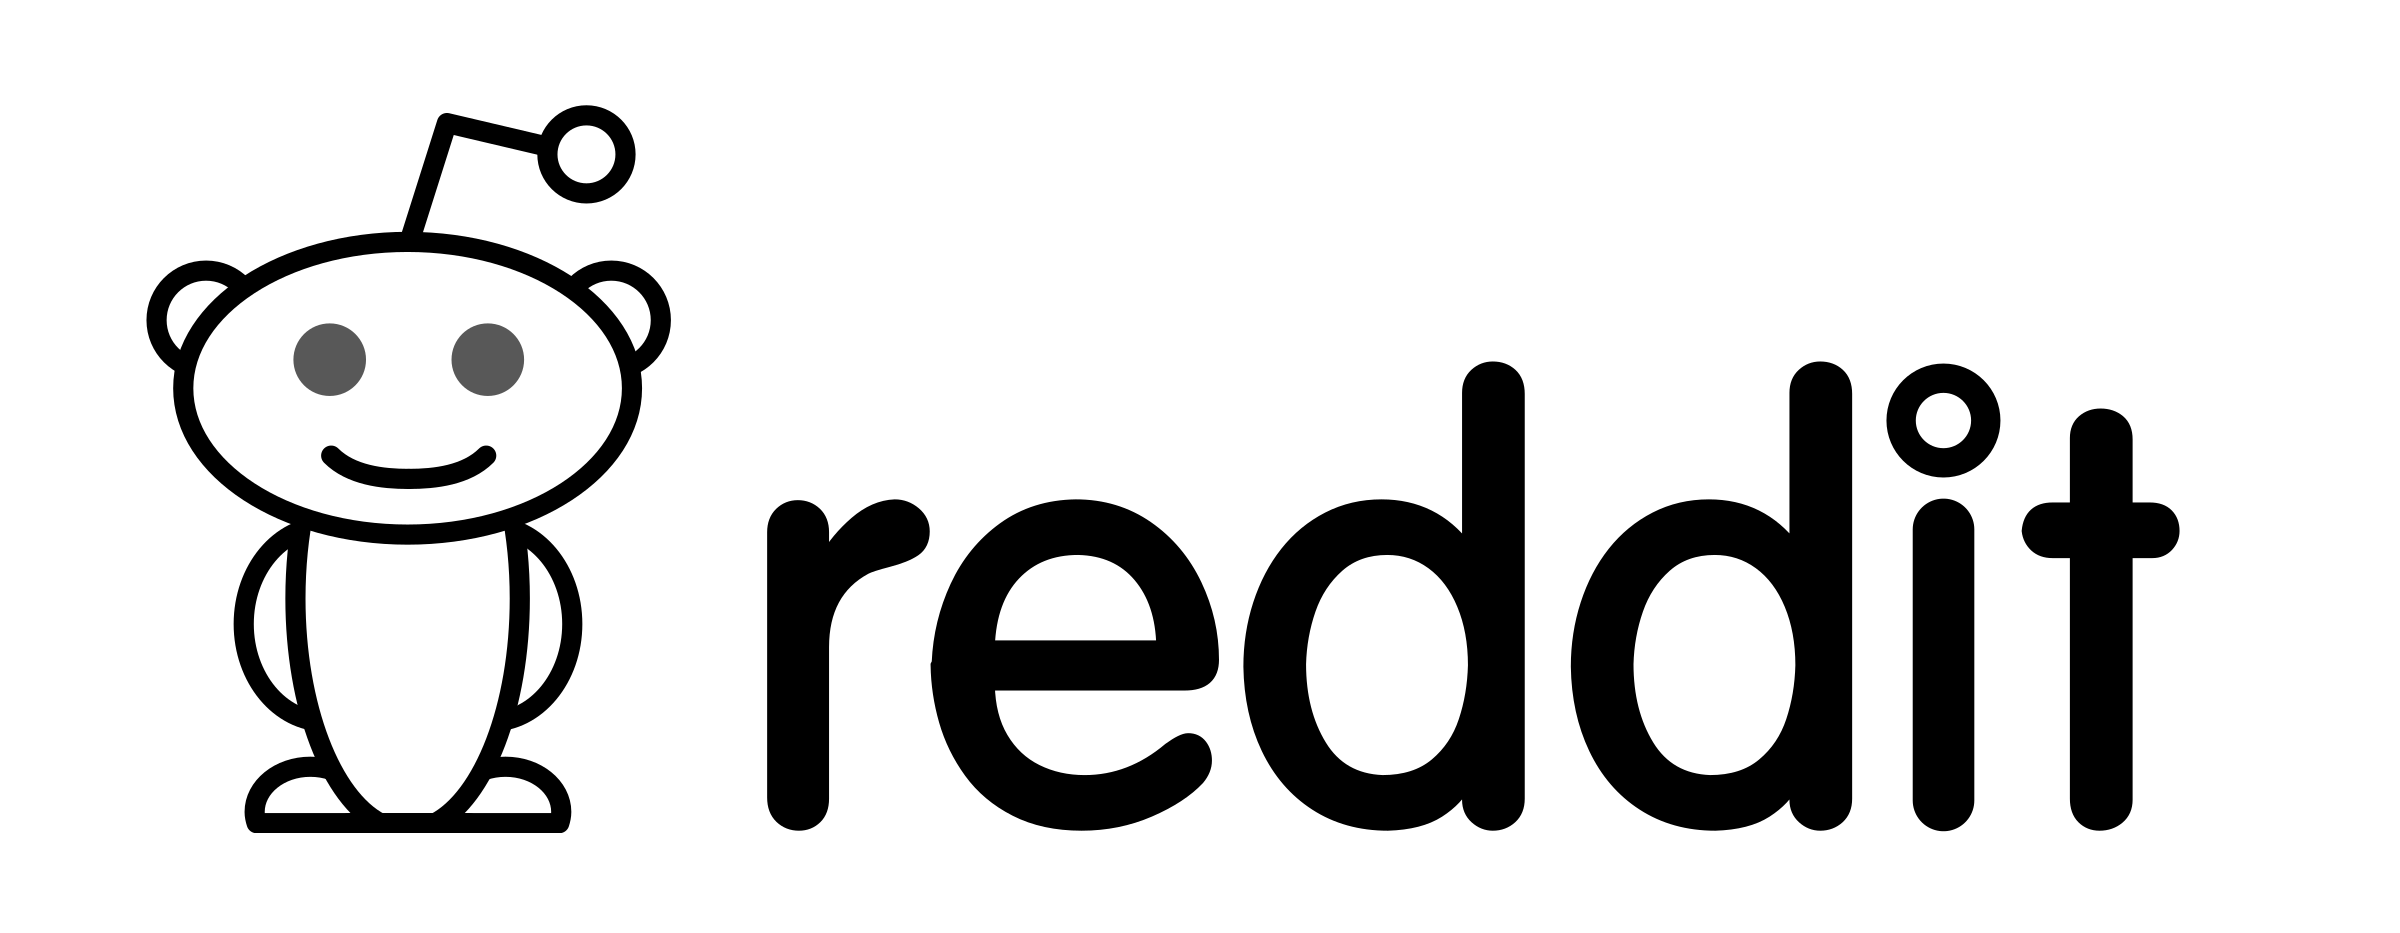 Reddit Logo, Png, 980x980px, 